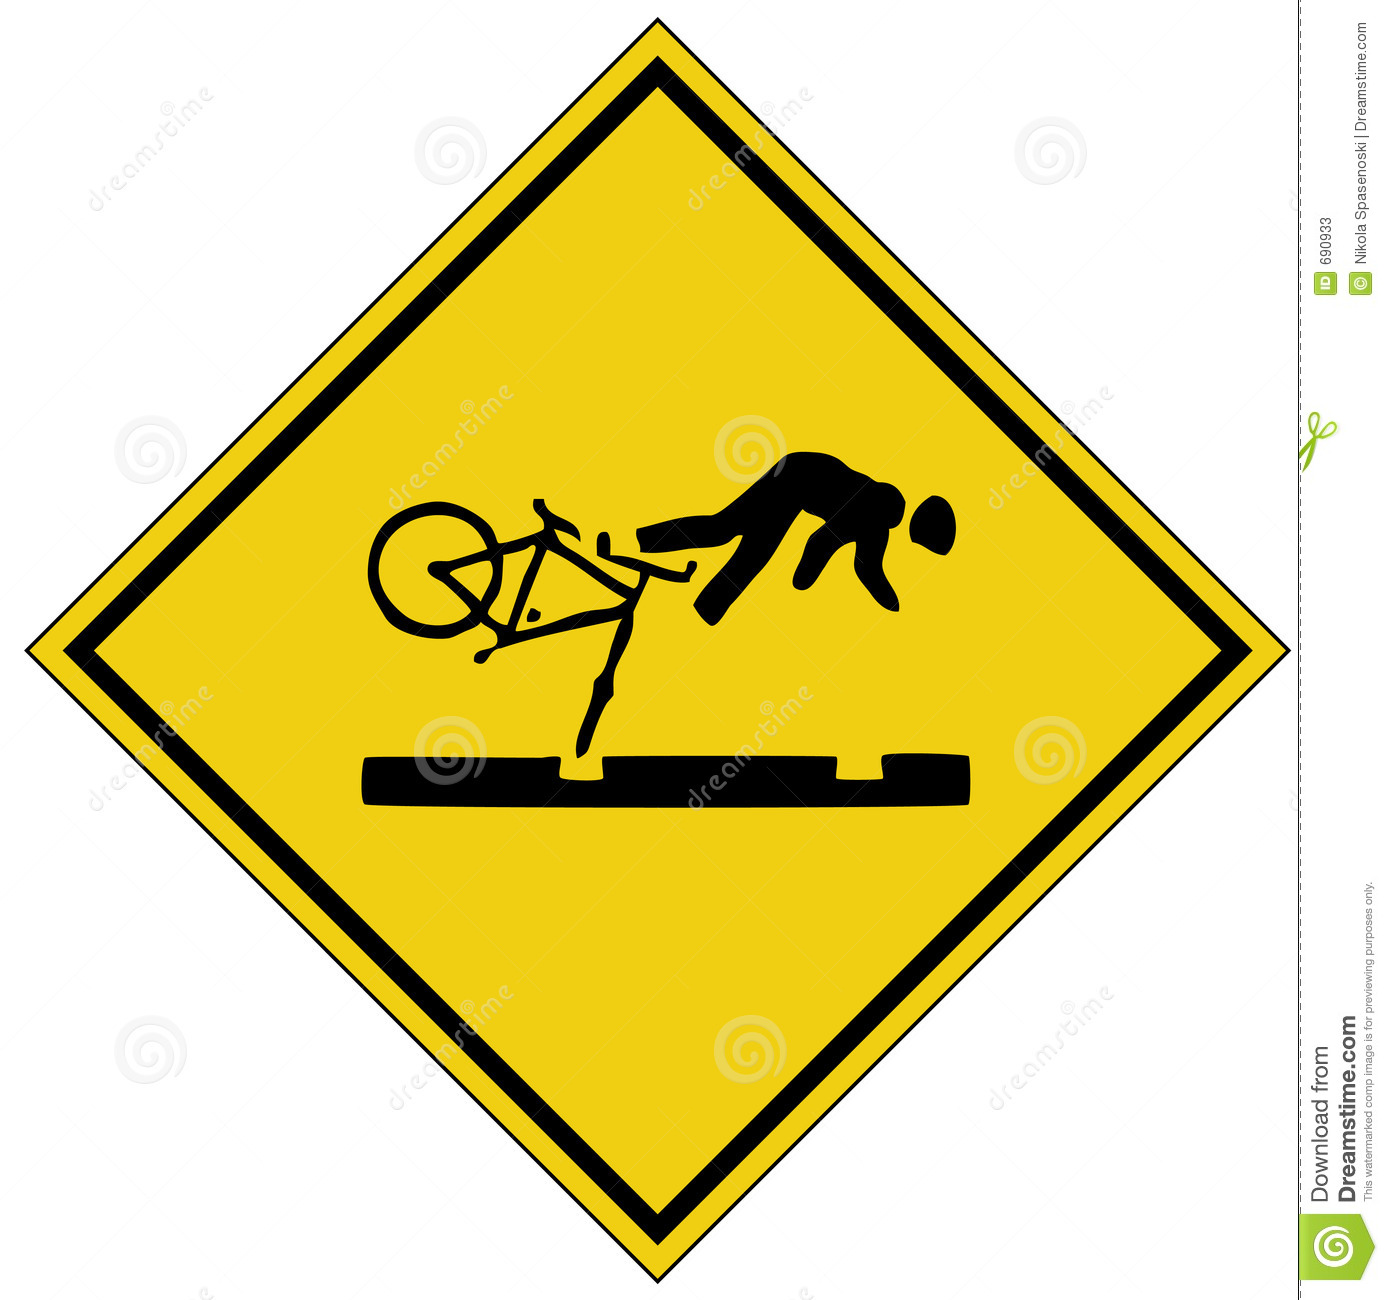 Bike Crash Sign  Ai Format Available  Stock Photos   Image  690933